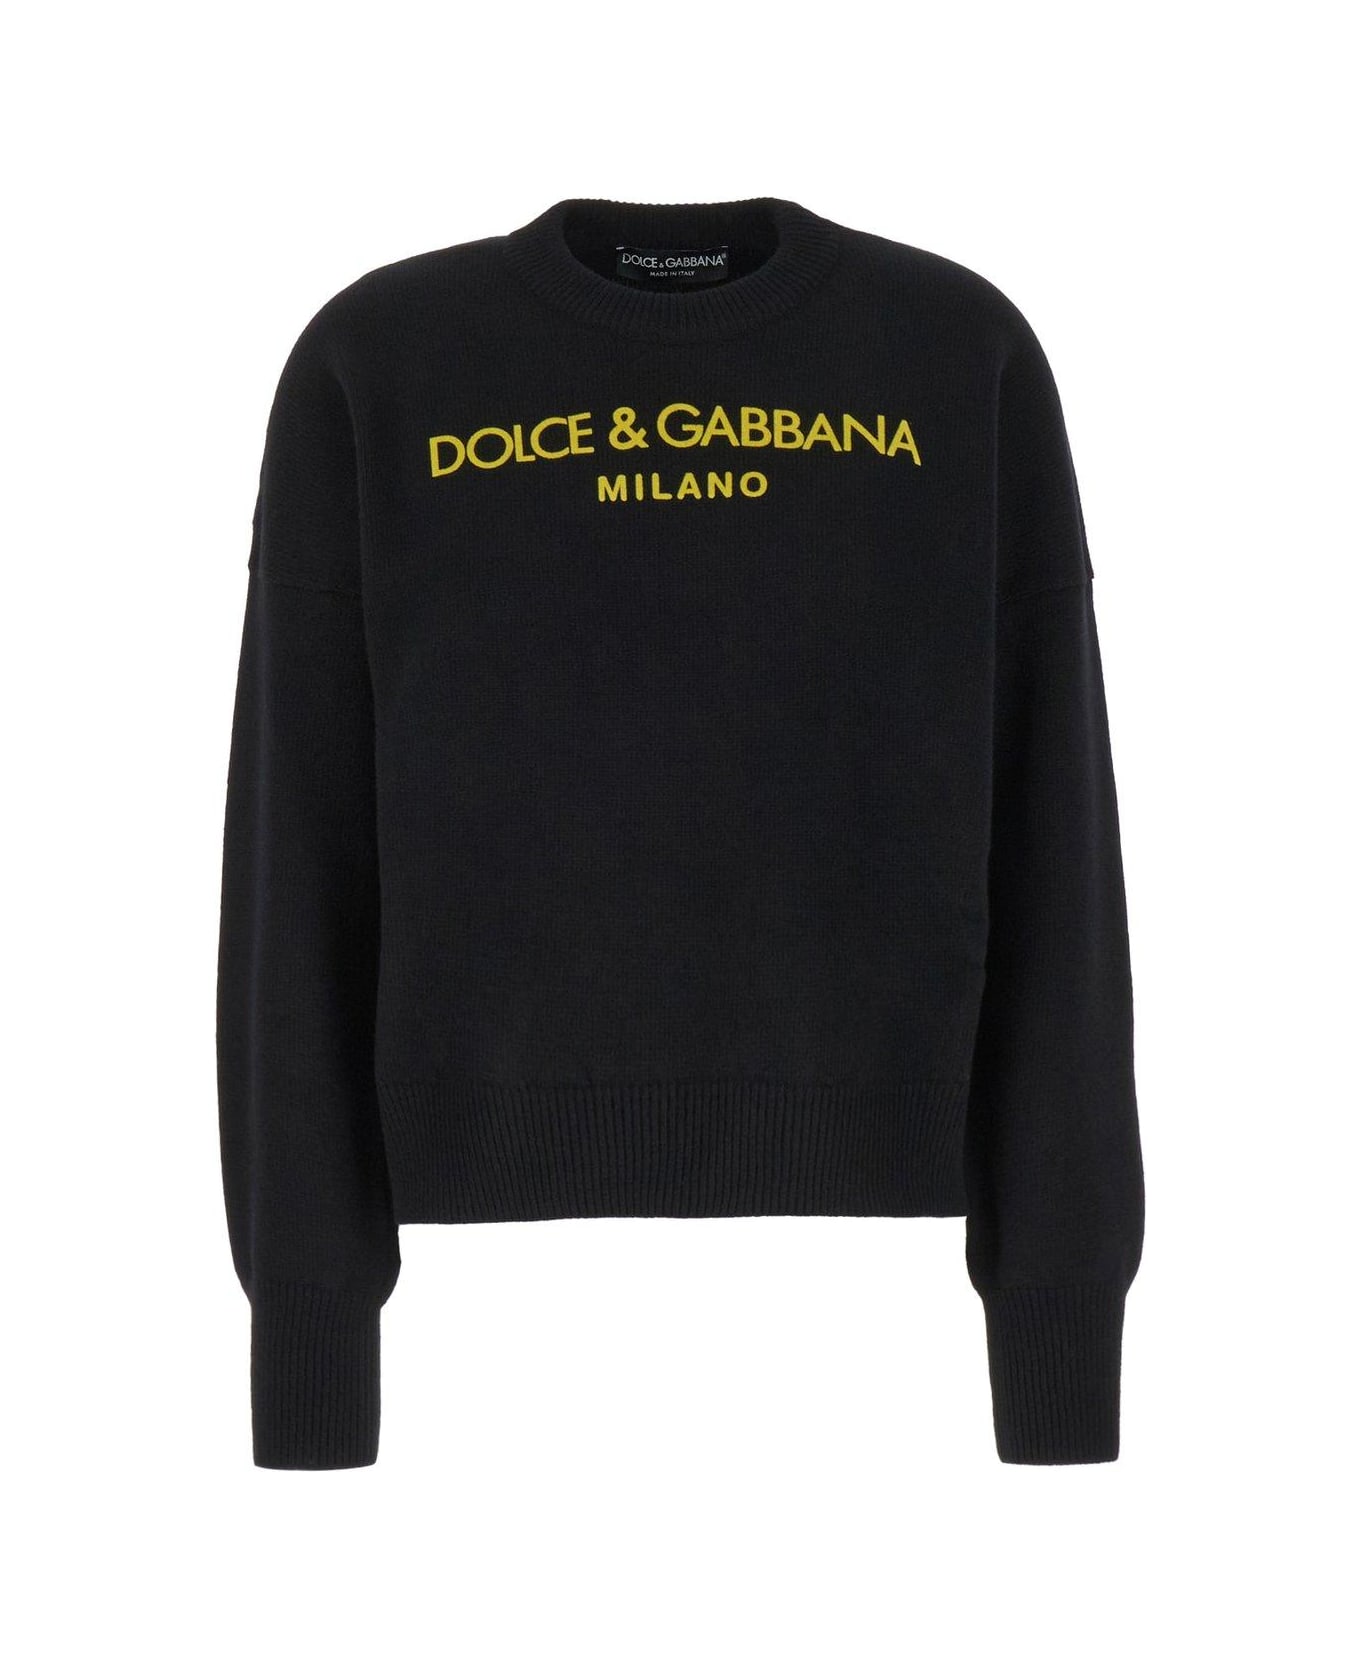 Dolce & Gabbana Logo Printed Knit Jumper - Nero Giallo